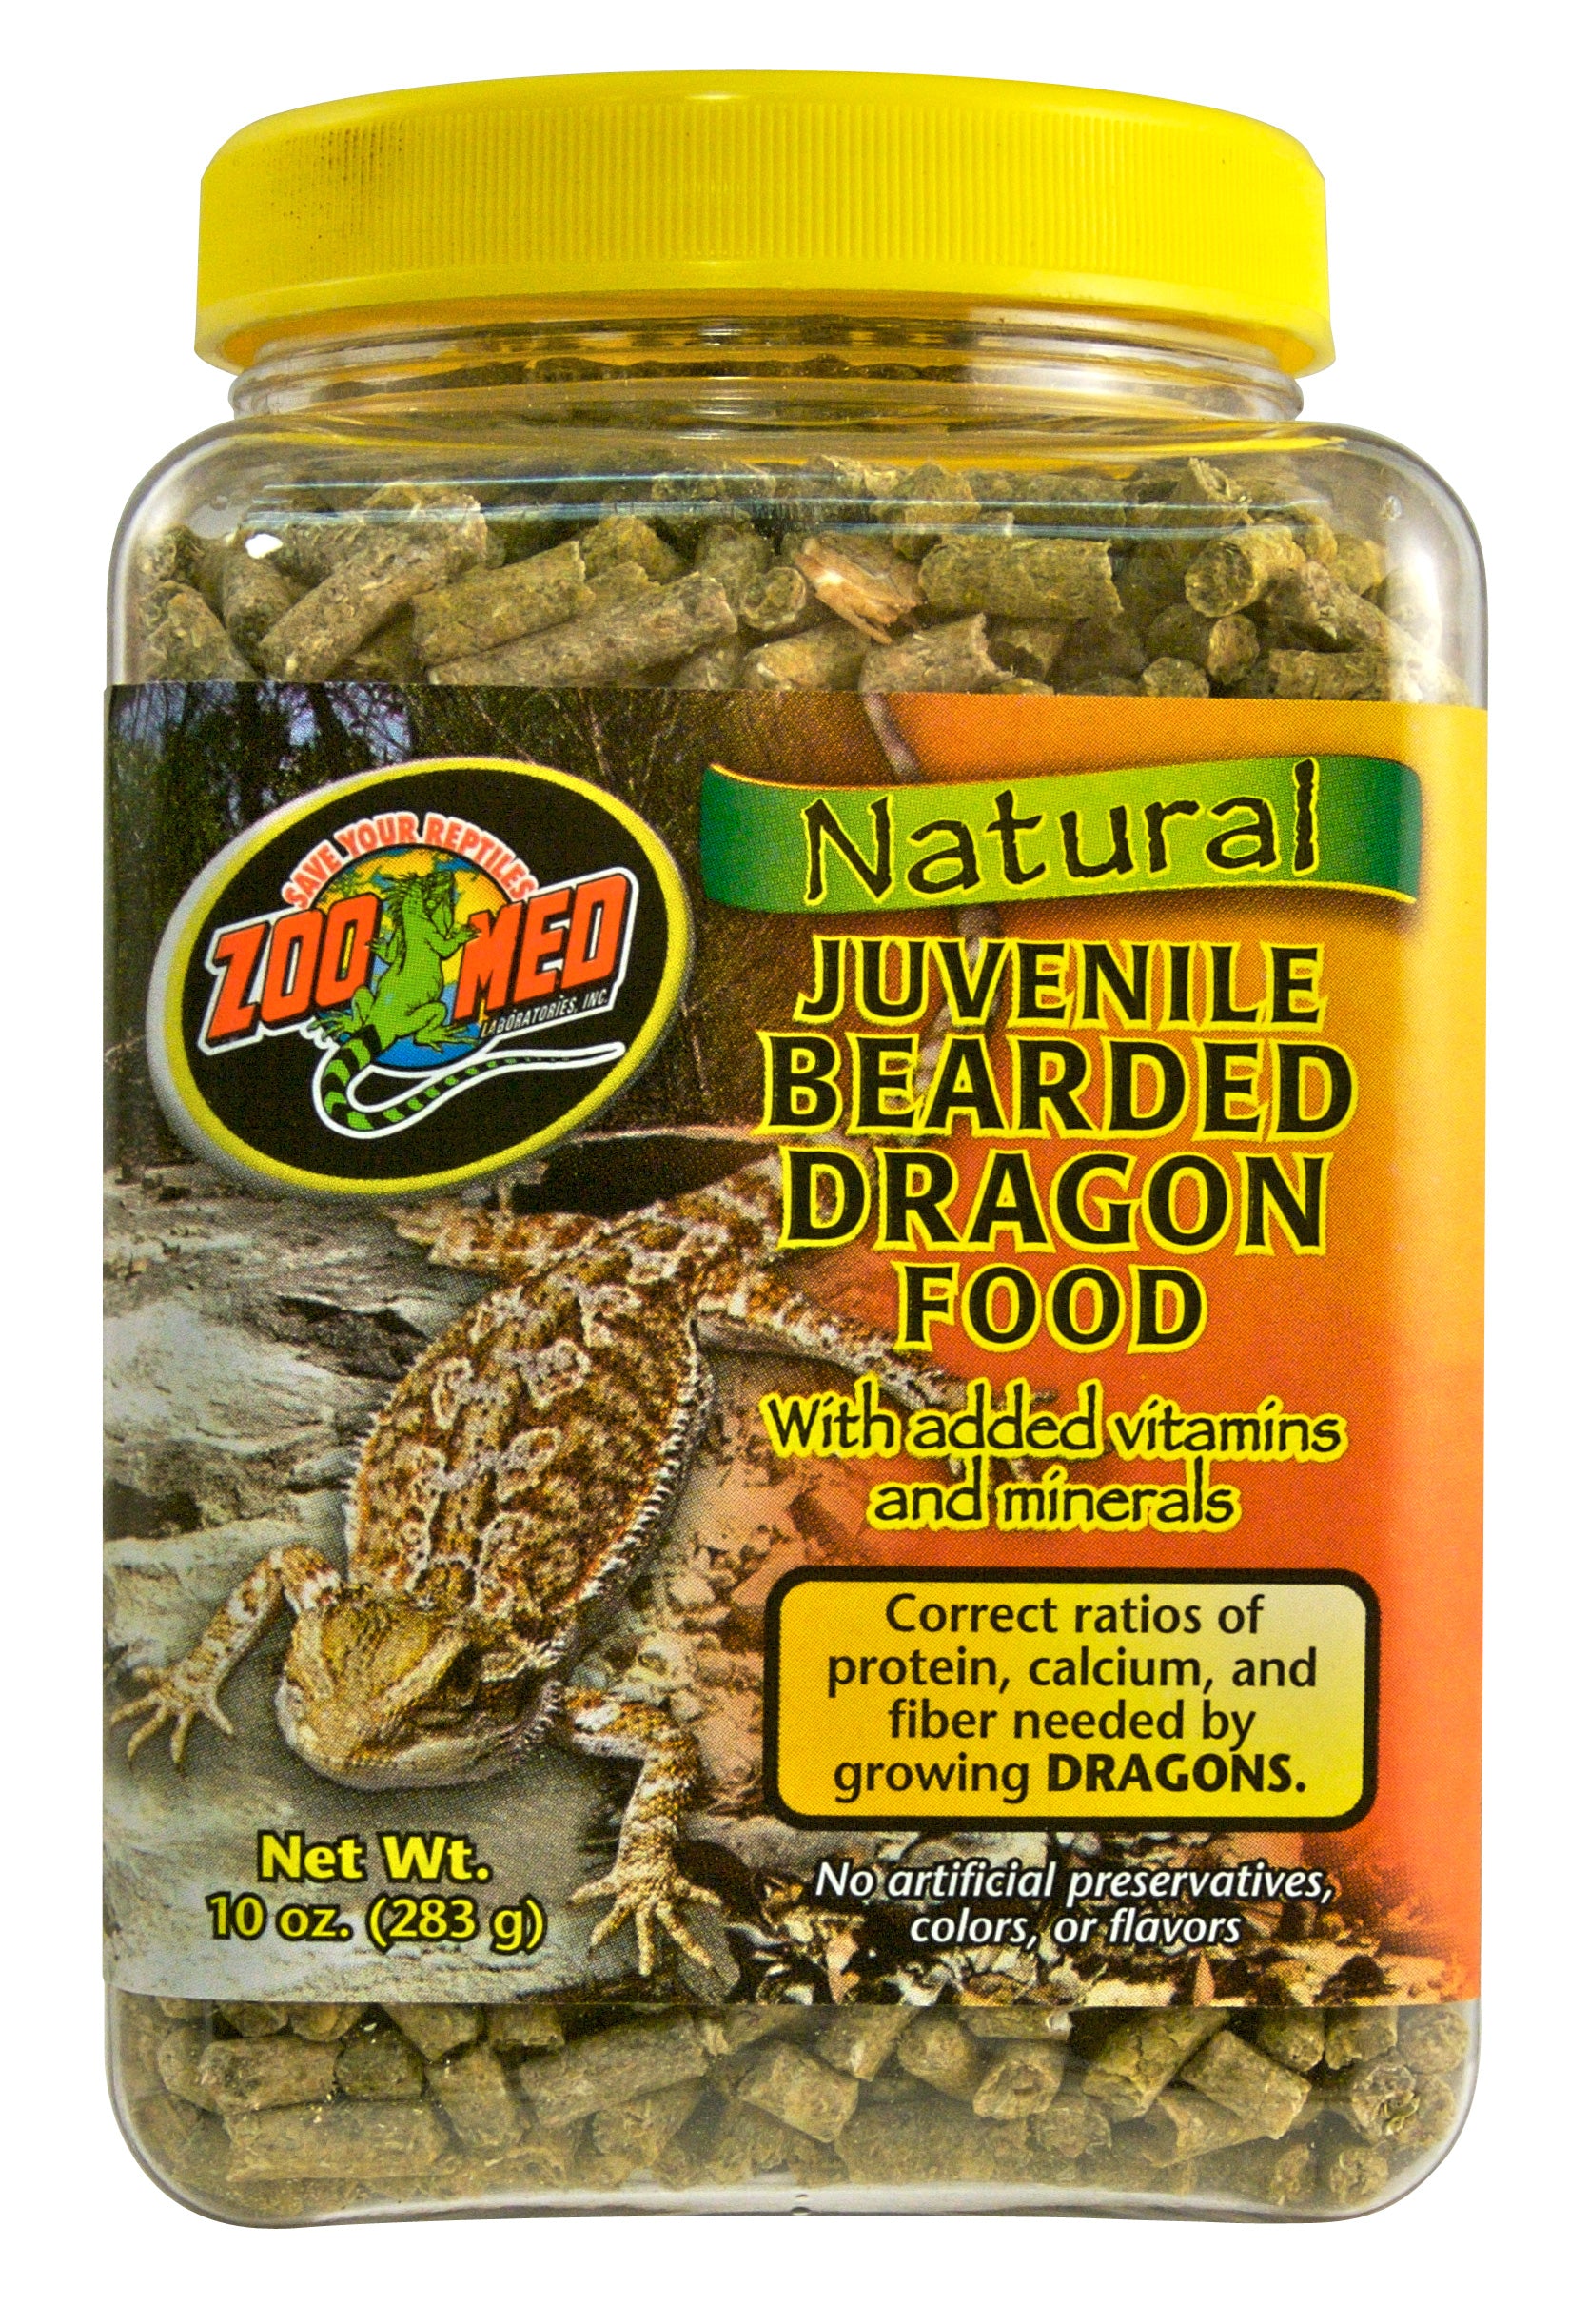 Zoo Med Natural Bearded Dragon Food – Juvenile Formula